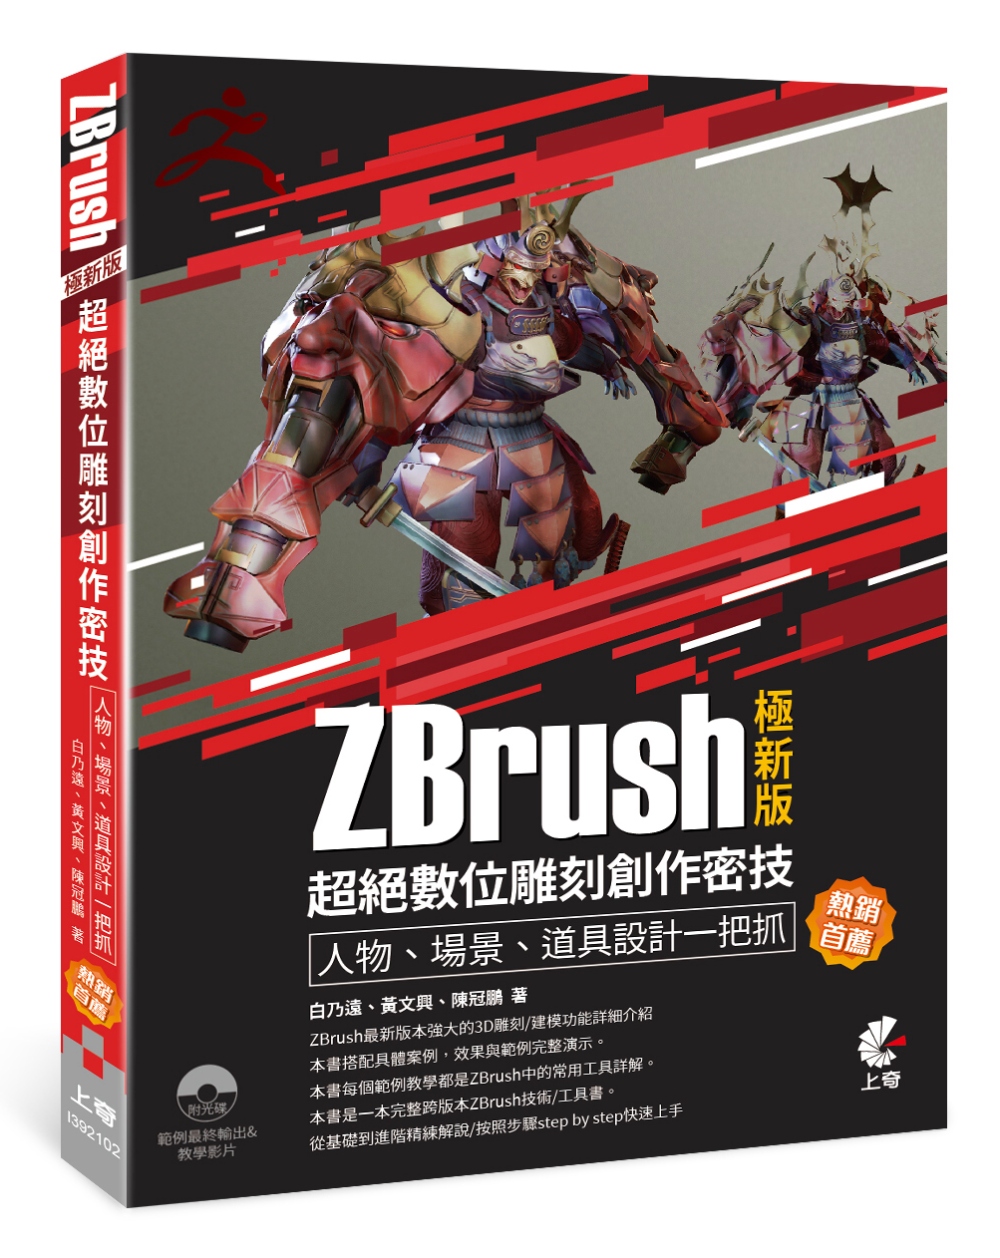 ZBrush極新版-超絕數位雕刻創作密技-人物、場景、道具設...